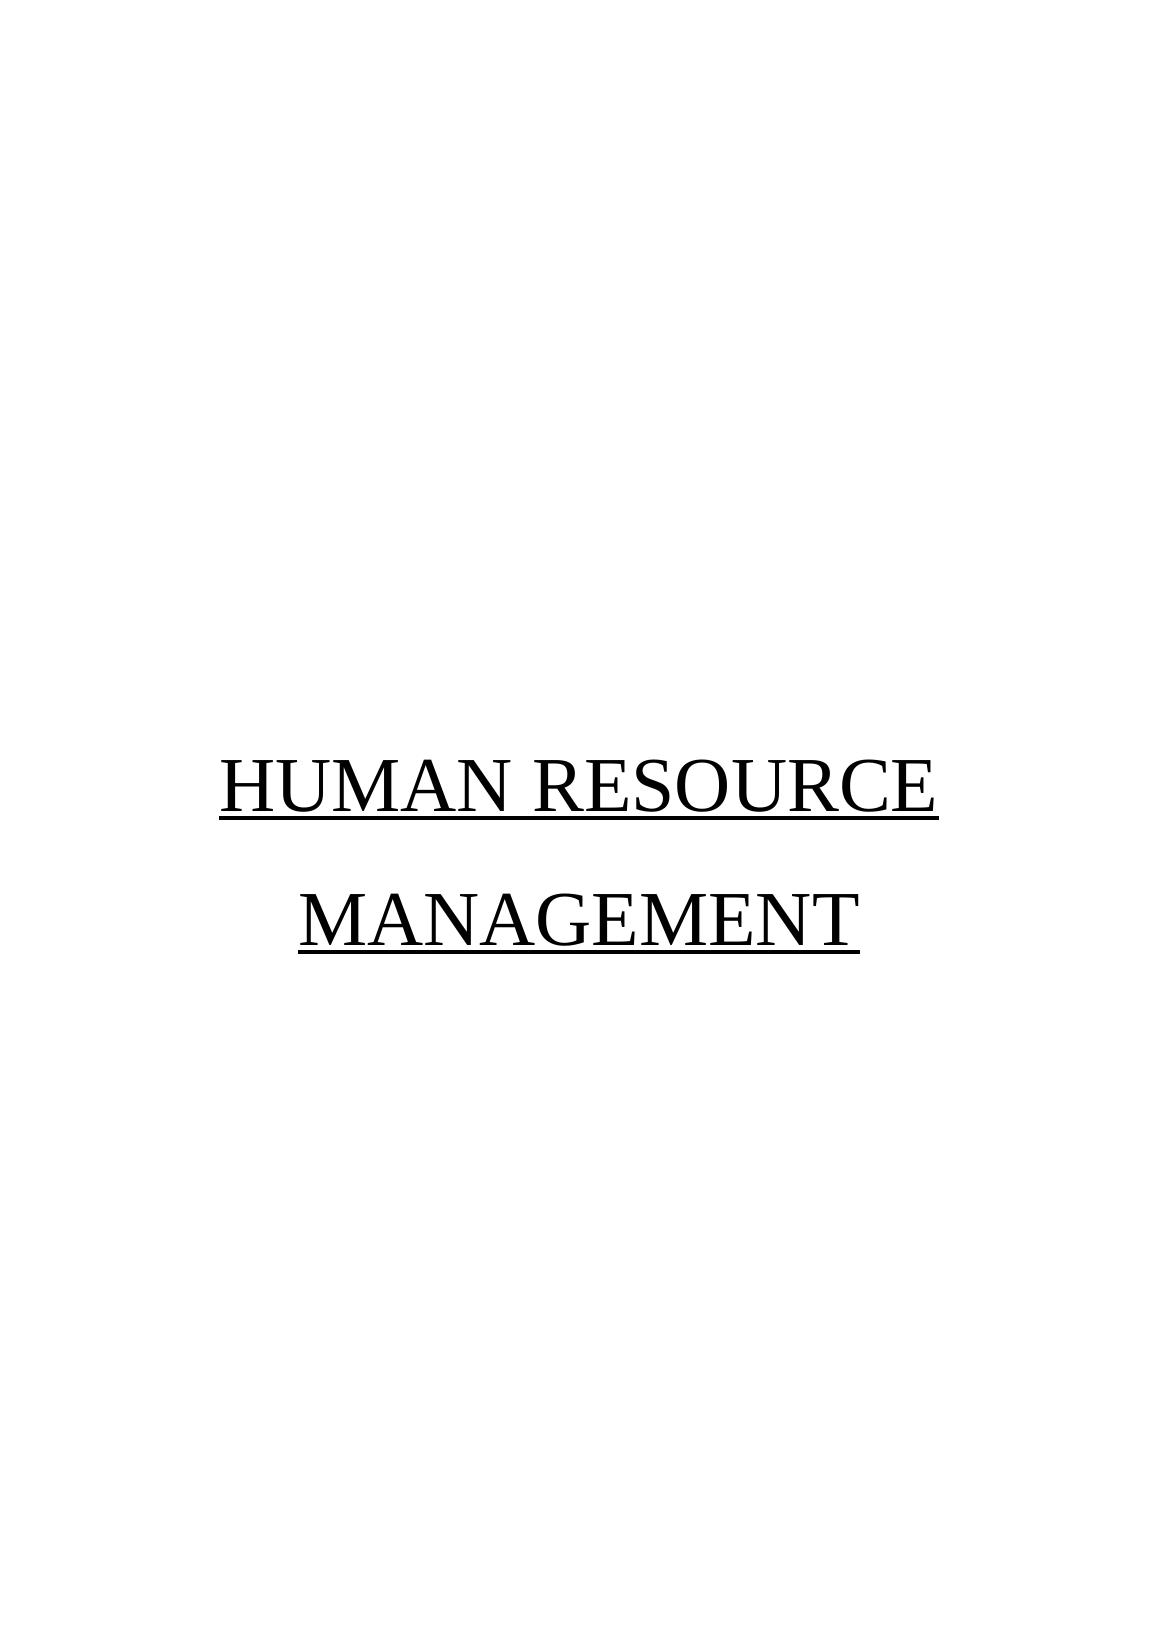 Human Resource Management | Introduction_1